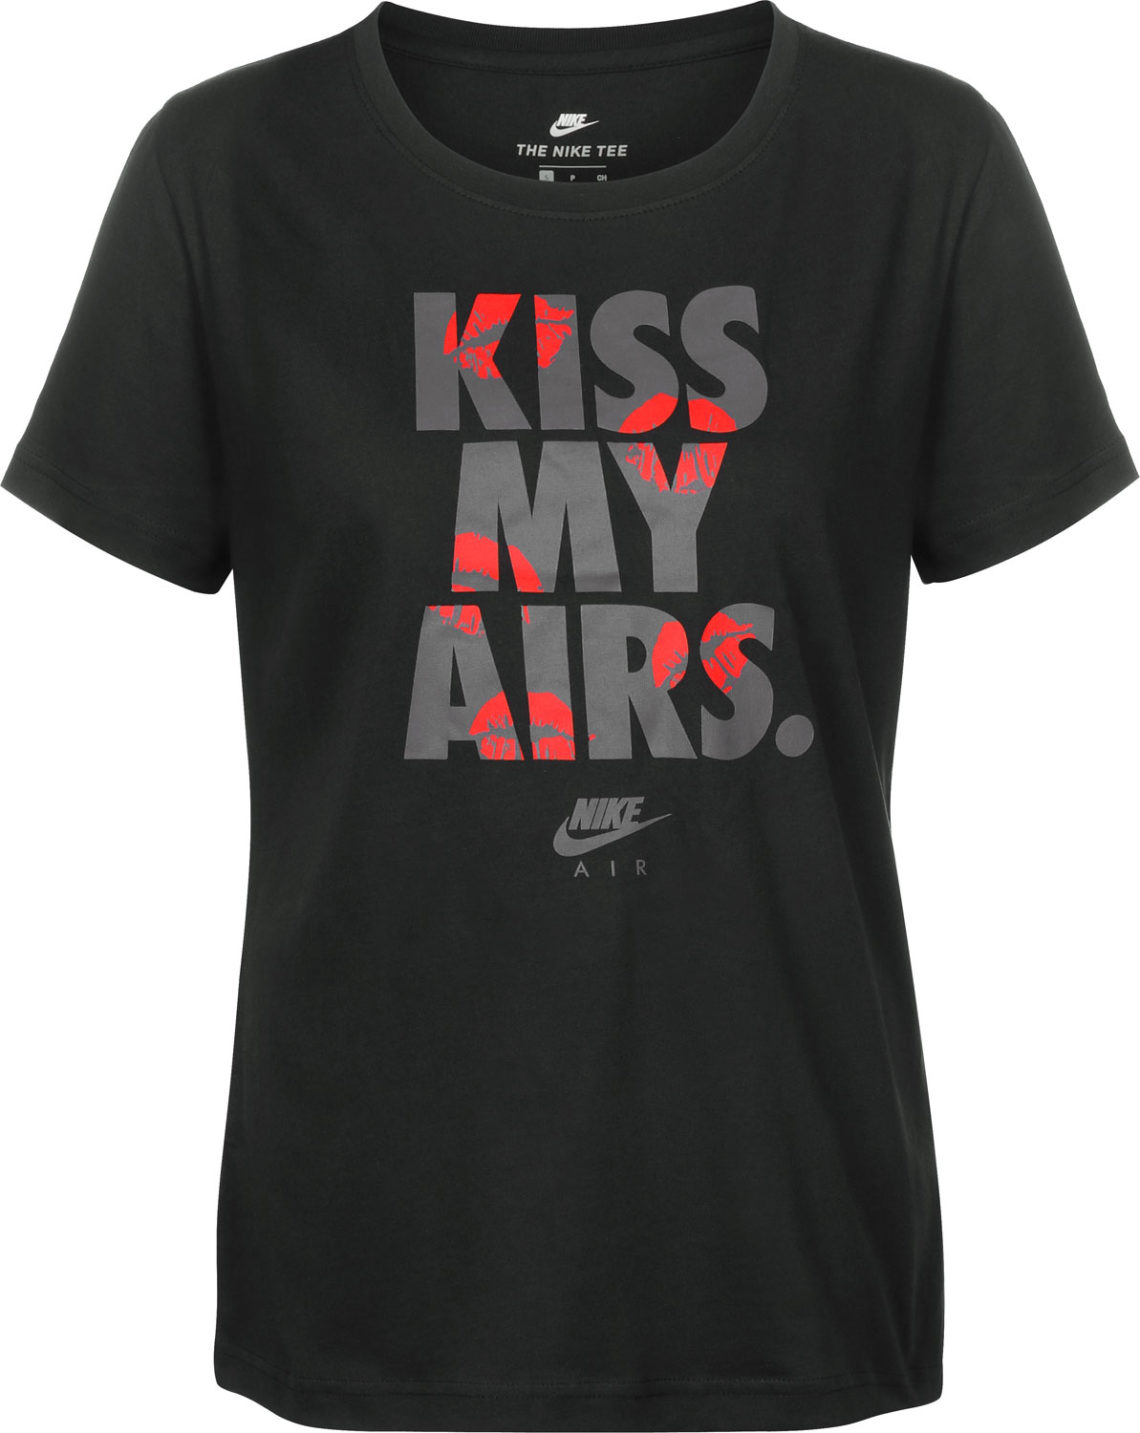 Kiss Air Kiss Air, majice ,moda,nike, Nike Kiss Air Crew, Swoosh majice